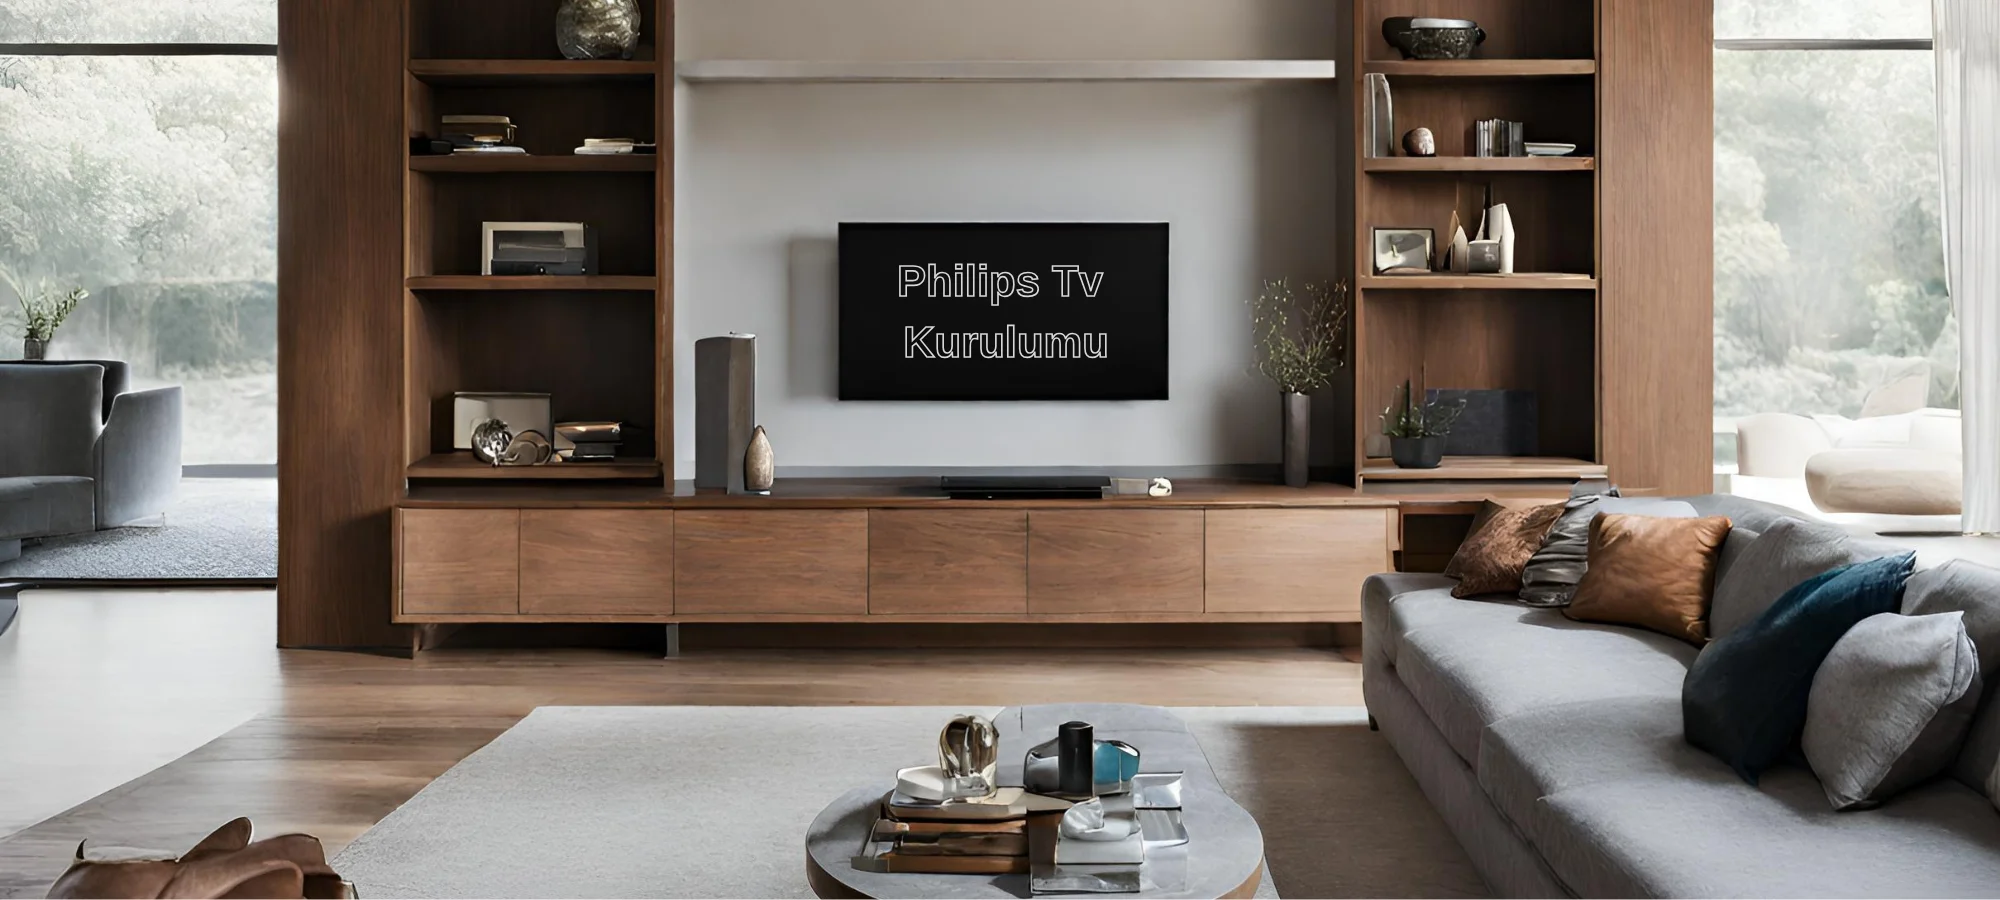 Philips Tv Kurulumu (Android TV)